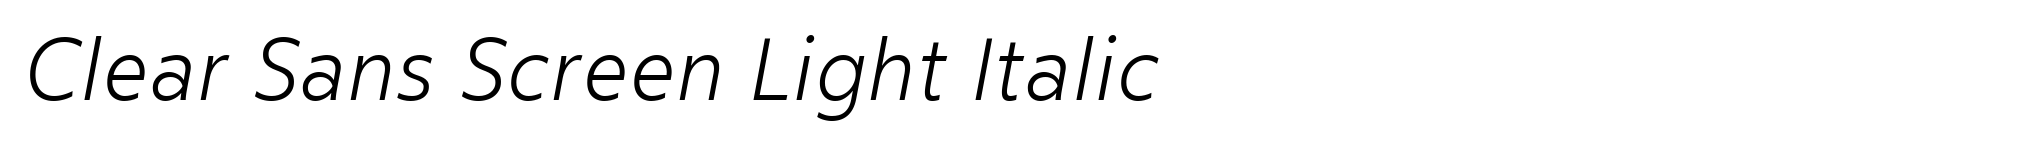 Clear Sans Screen Light Italic image